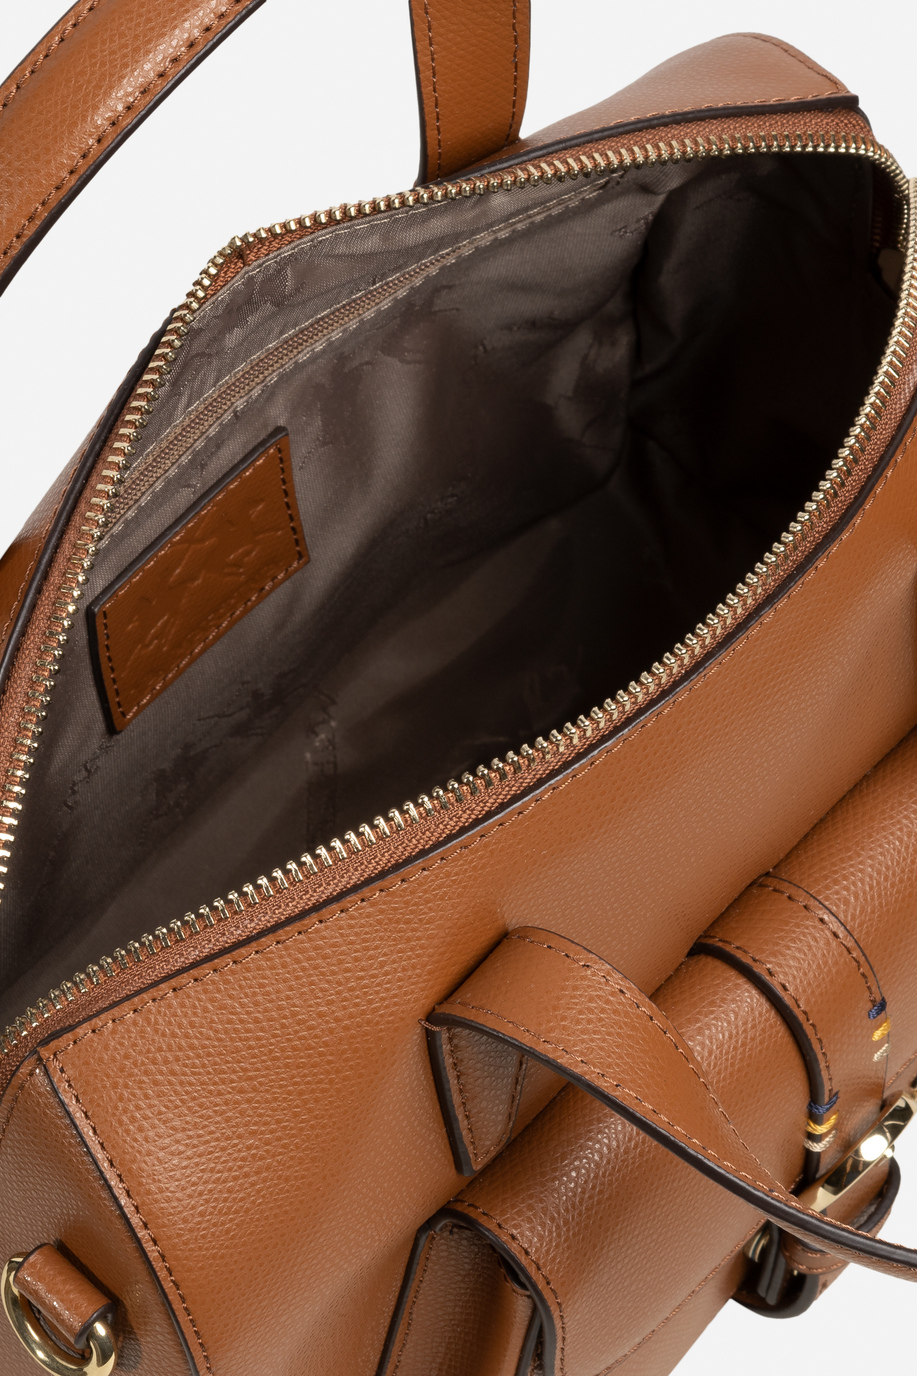 Damentasche aus Leder - Taschen | La Martina - Official Online Shop